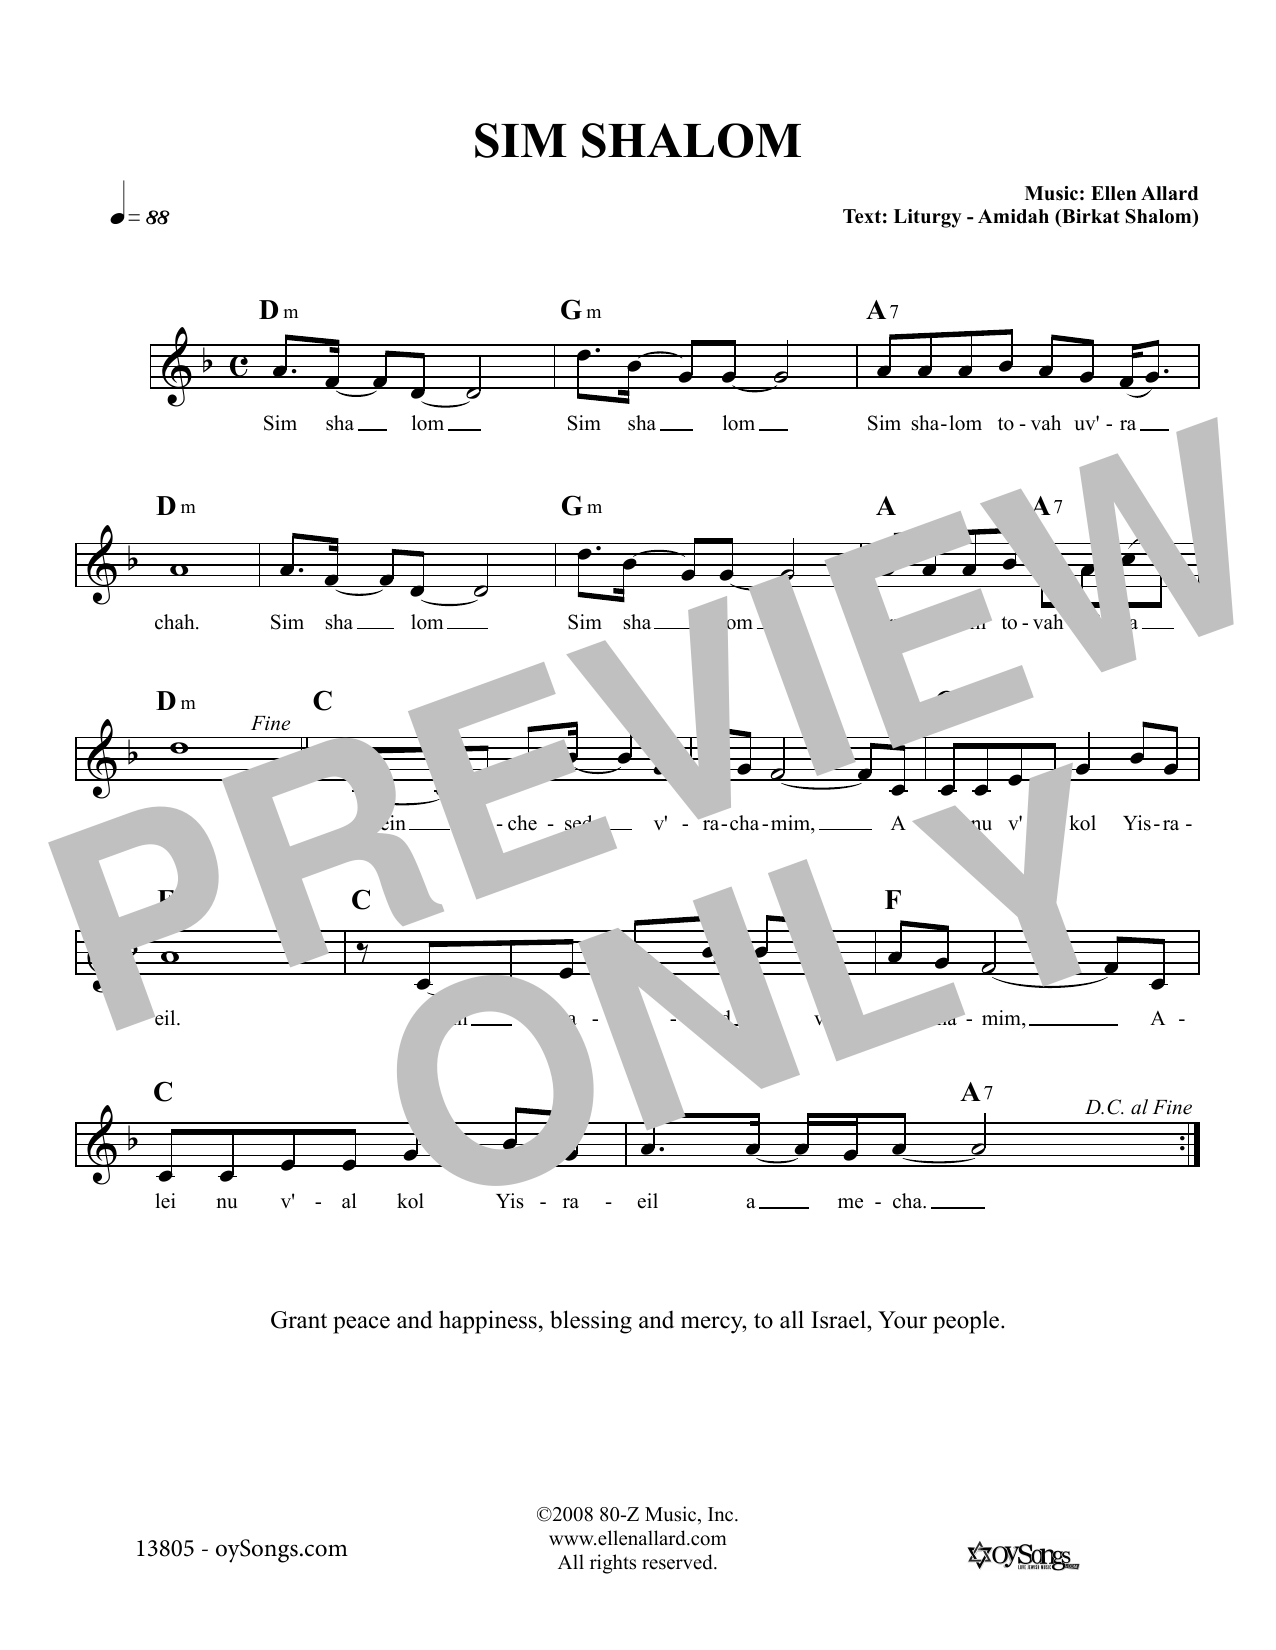 Ellen Allard Sim Shalom Sheet Music Notes & Chords for Melody Line, Lyrics & Chords - Download or Print PDF